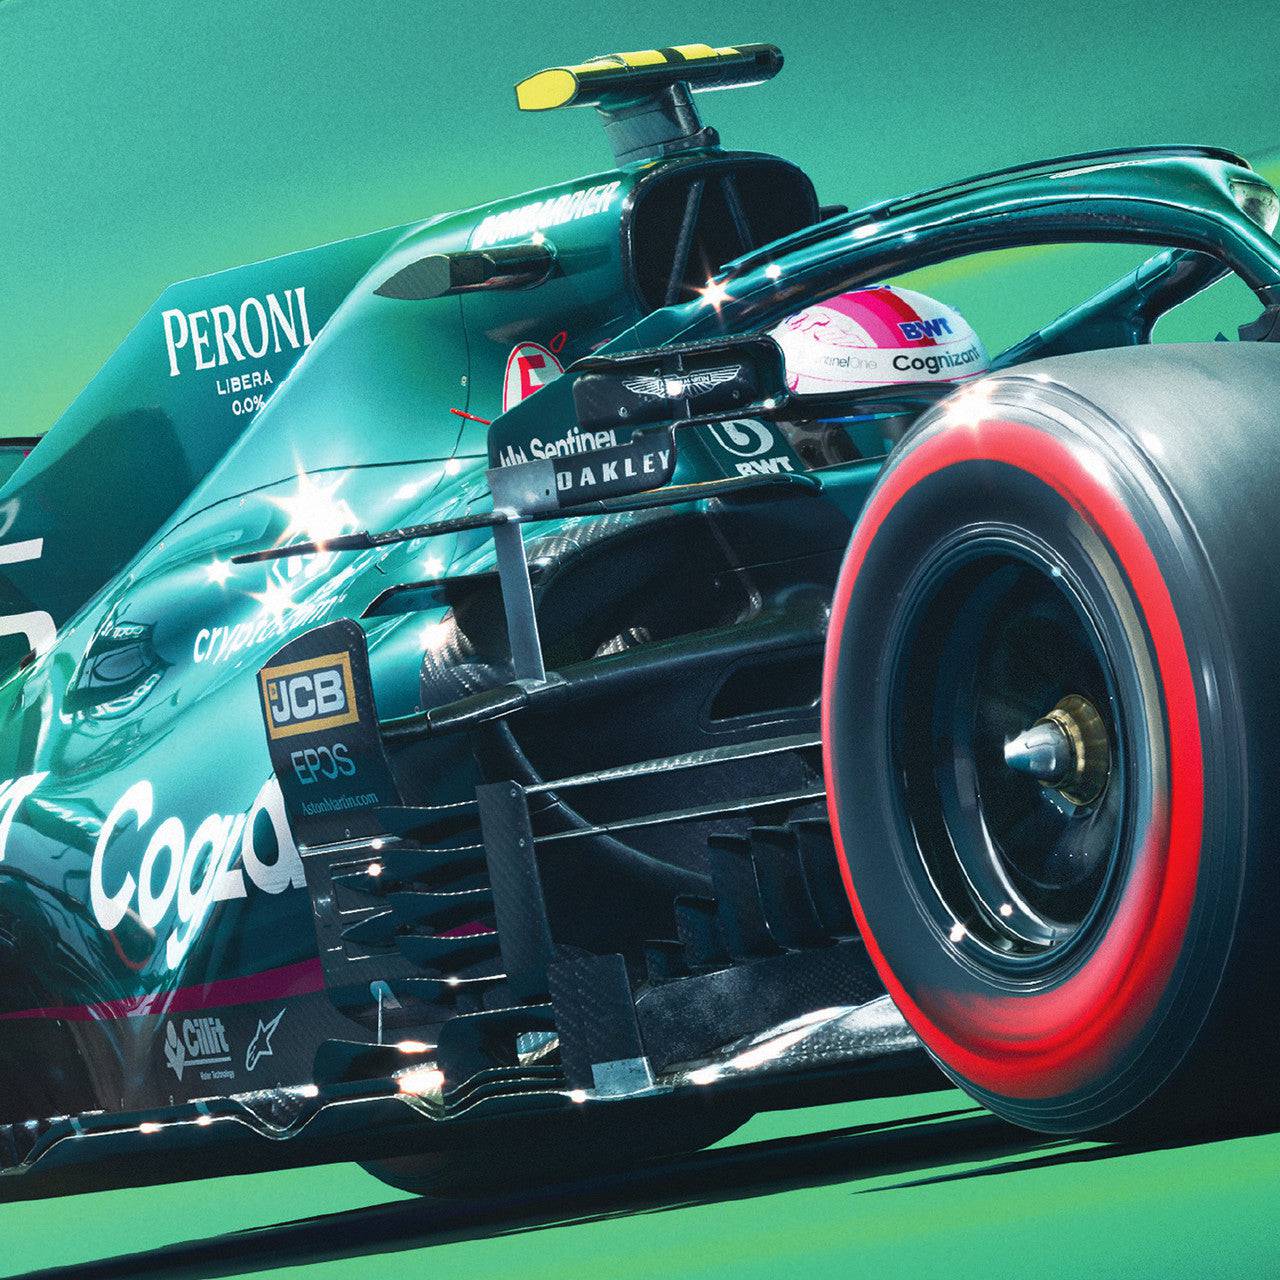 Aston Martin Cognizant Formula One™ Team - Sebastian Vettel - 2021 | Collector’s Edition